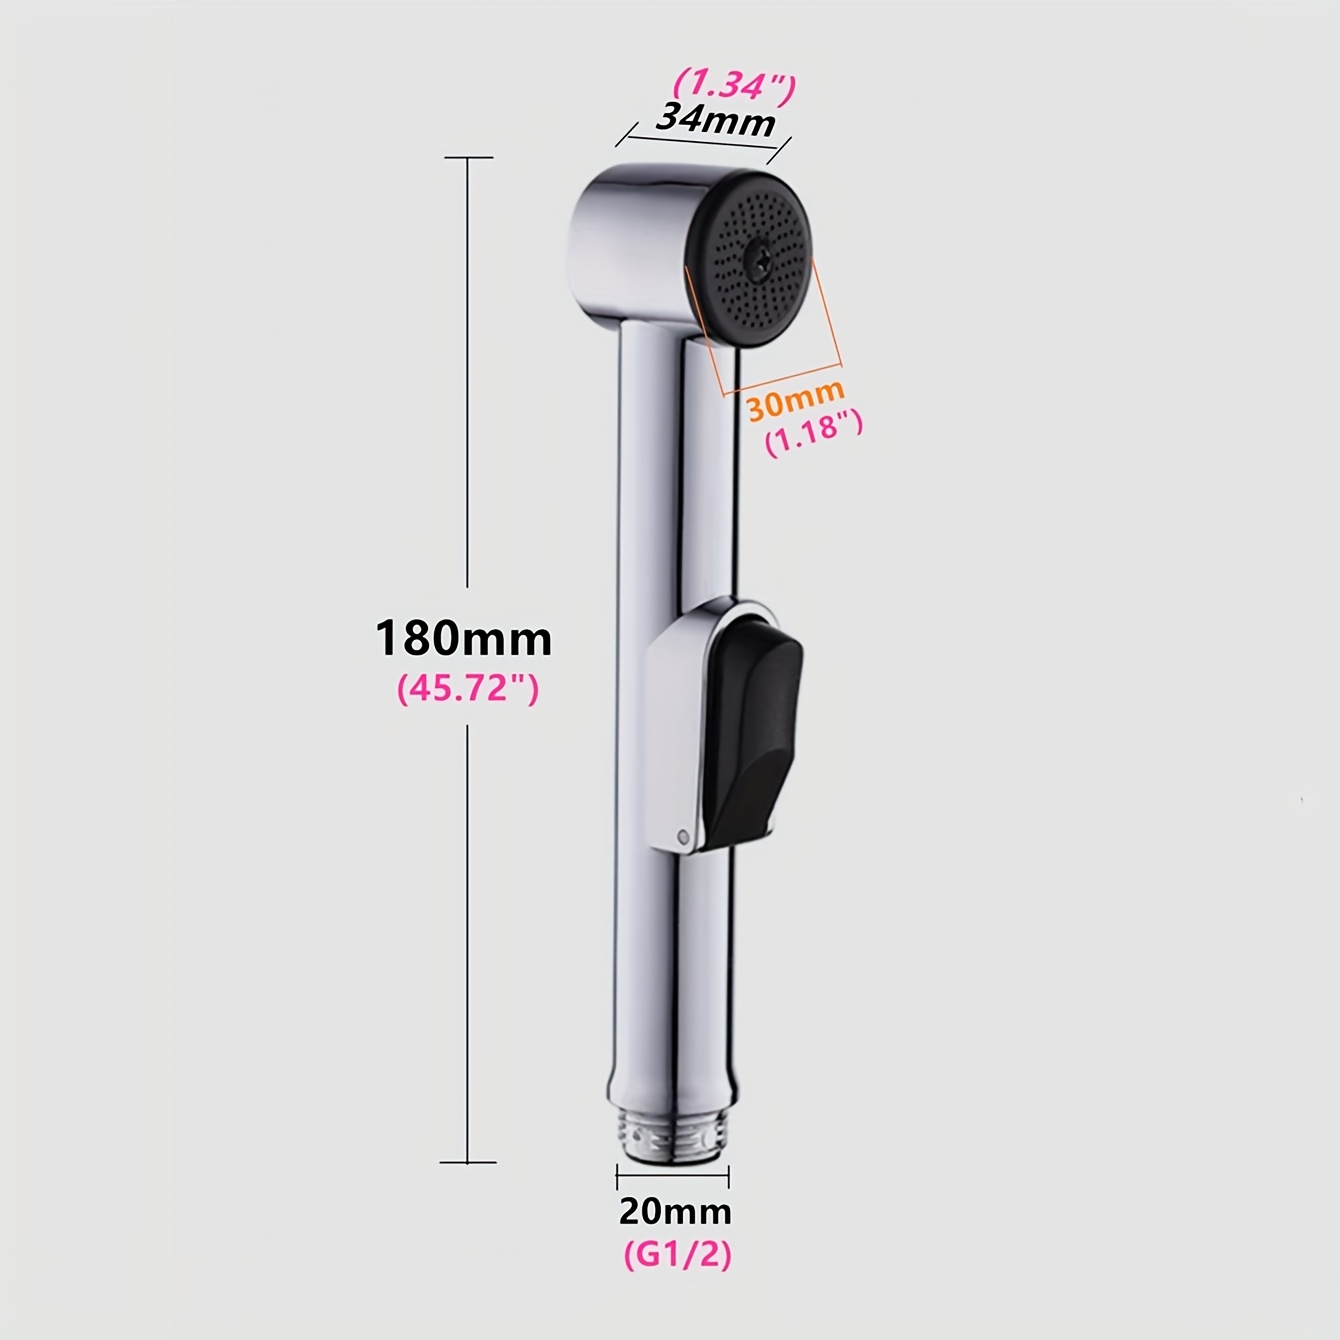 Arofa Handheld Toilet Bidet Sprayer for Toilet-Adjustable Water Pressure  Control with Bidet Hose for Feminine Wash, Stainless Steel Brushed Nickel